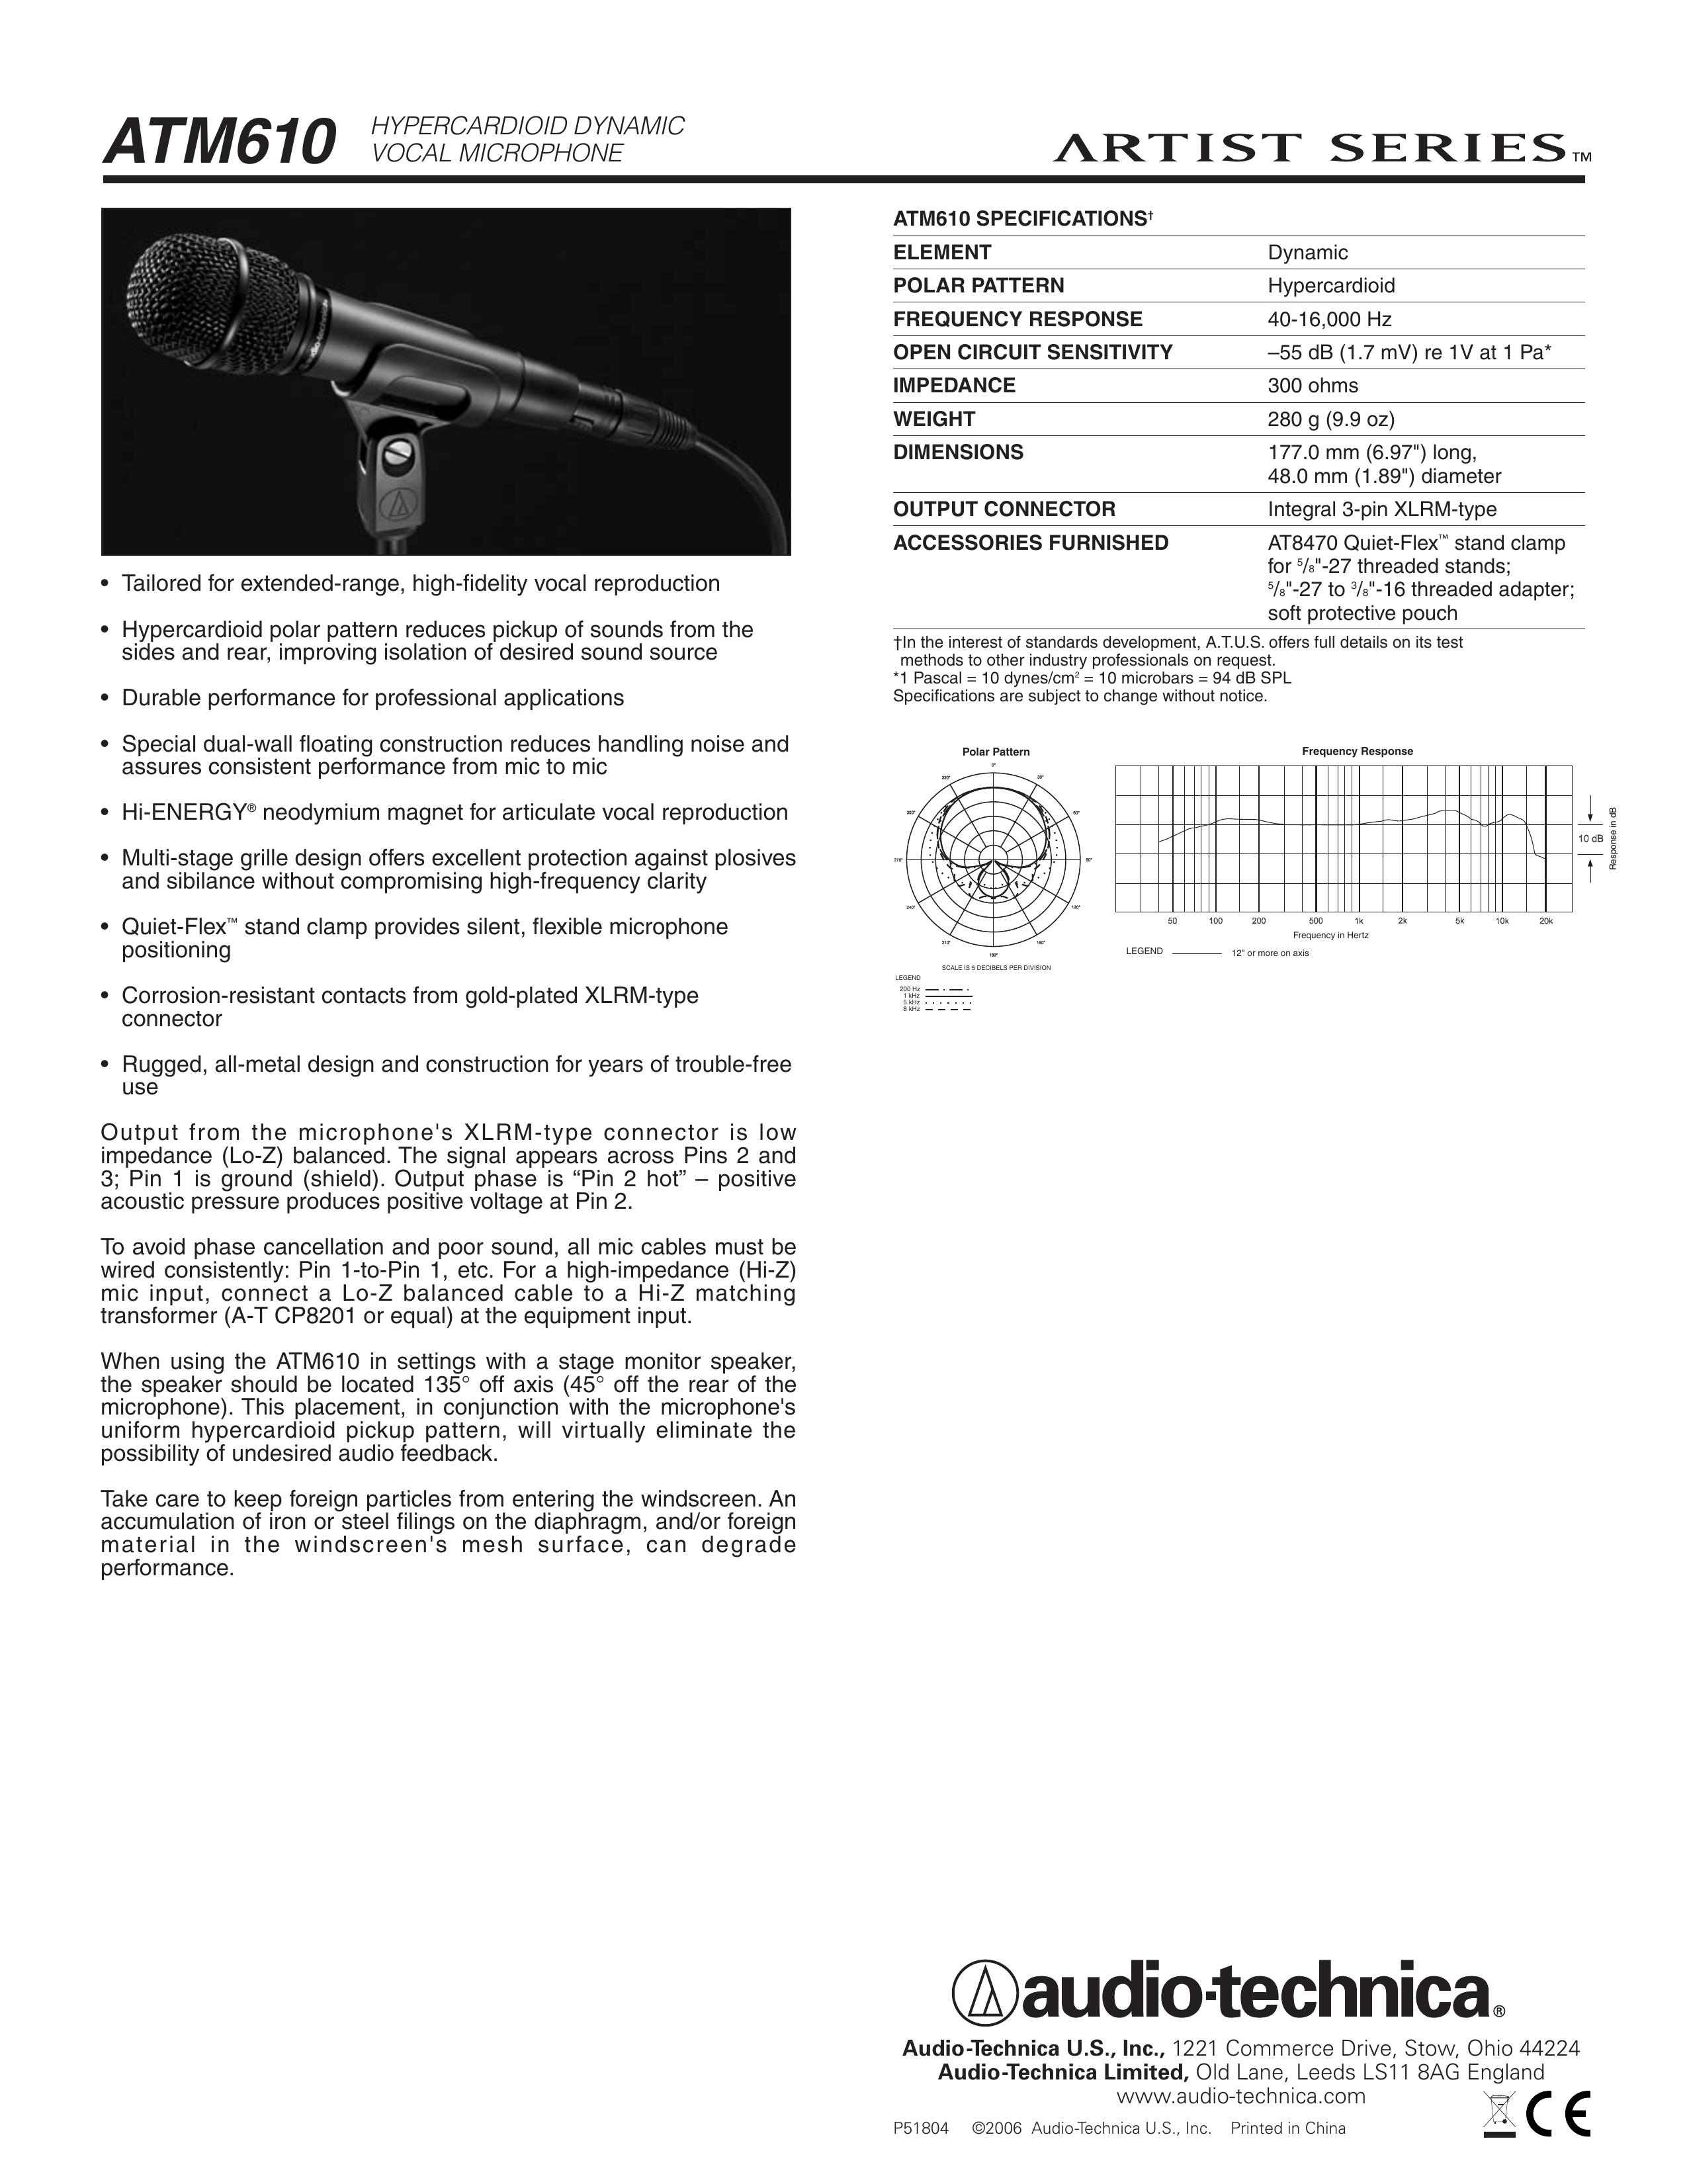 Audio-Technica ATM610 Microphone User Manual